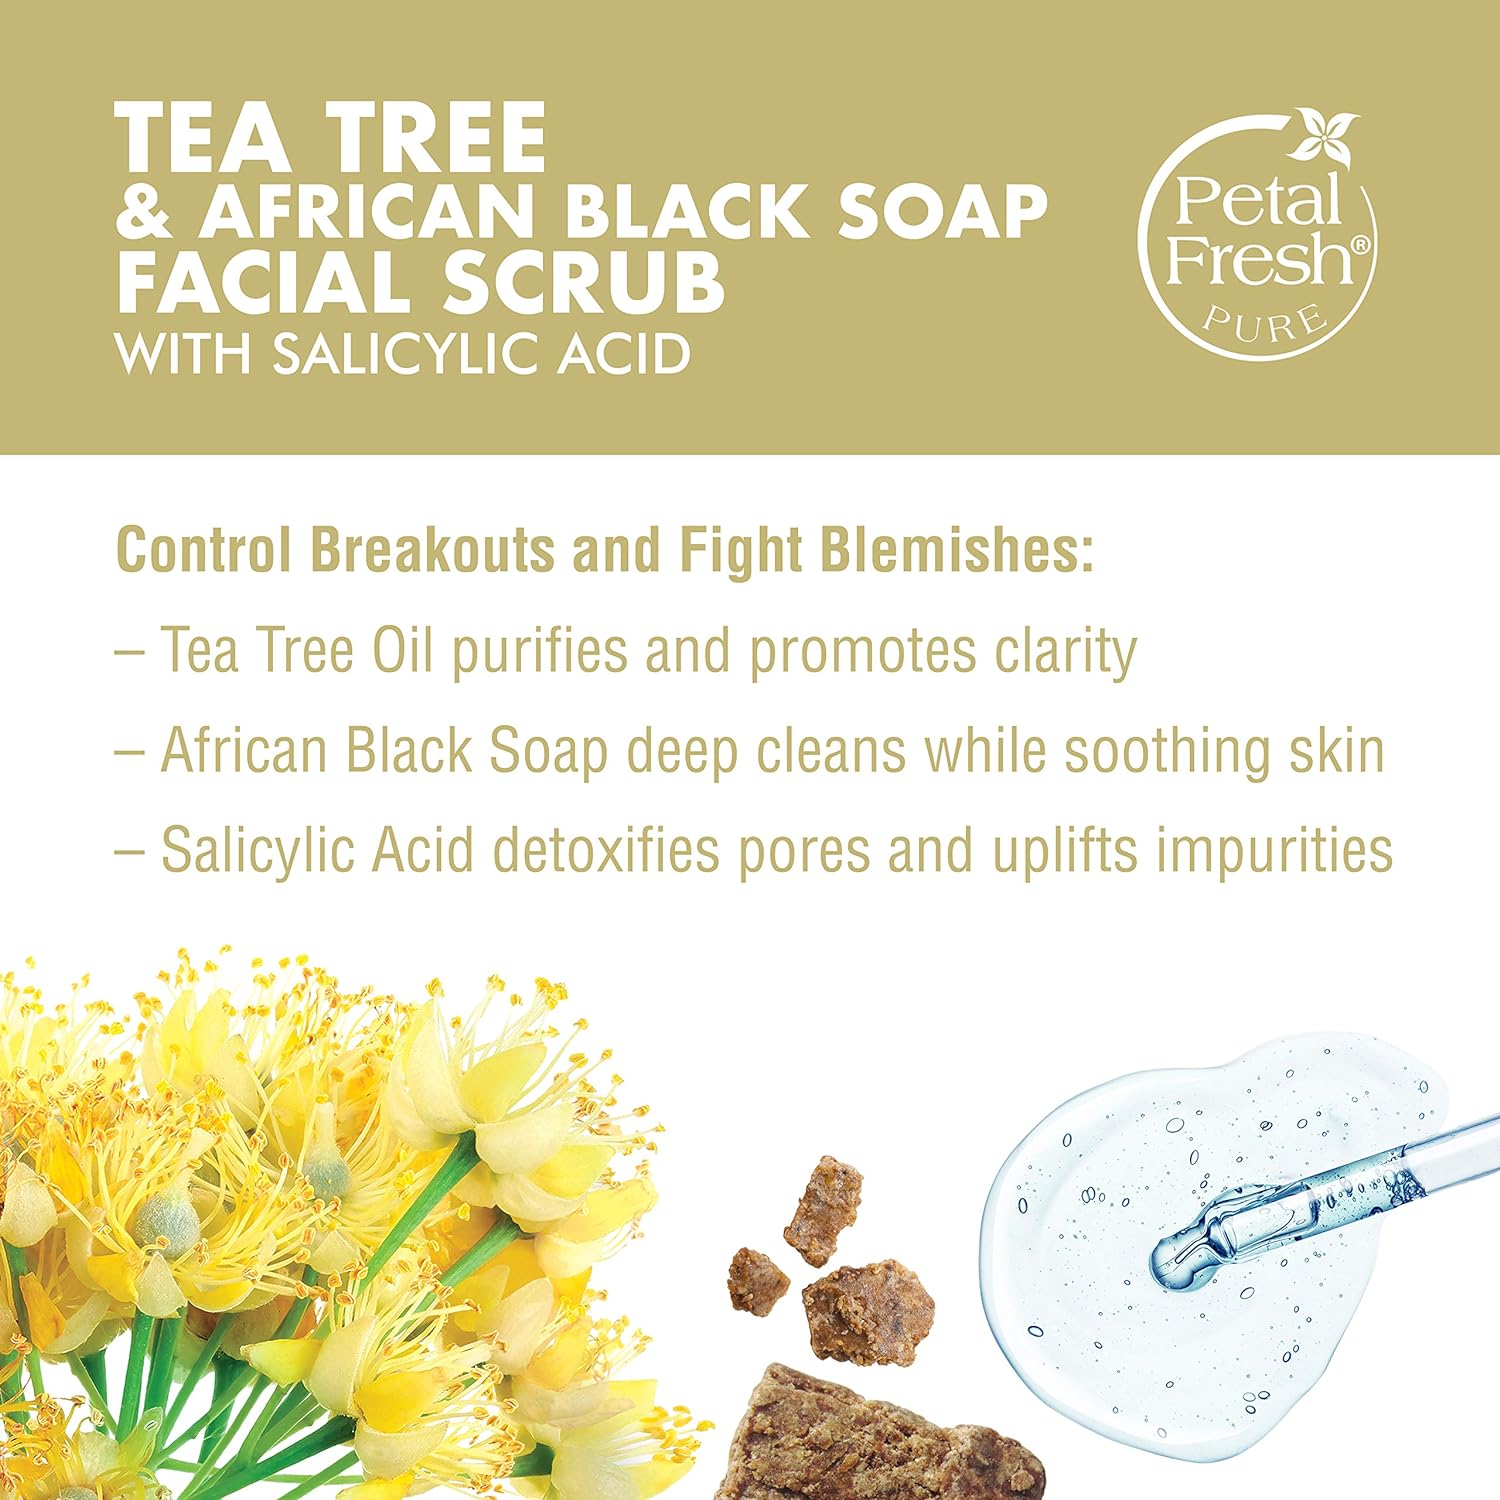 Petal Fresh Tea Tree & African Black Soap Facial Scrub, Pure Blemish Control, Clean Skincare, Natural Face Scrub, Daily Skincare, Vegan and Cruelty Free, 7 oz : Beauty & Personal Care